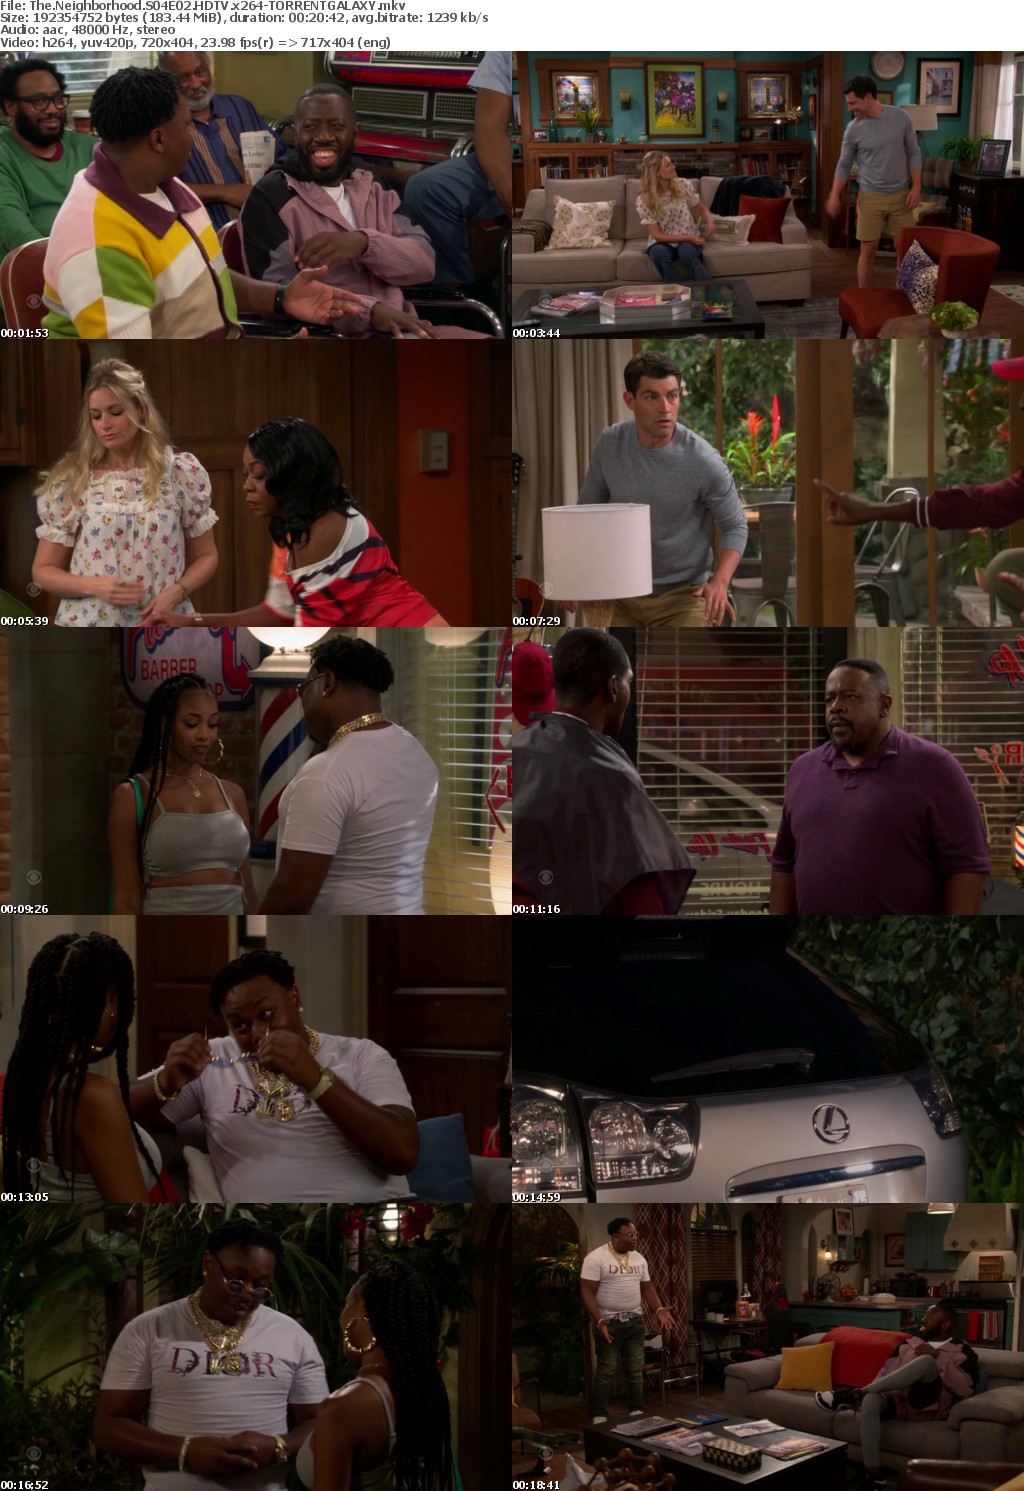 The Neighborhood S04E02 HDTV x264-GALAXY